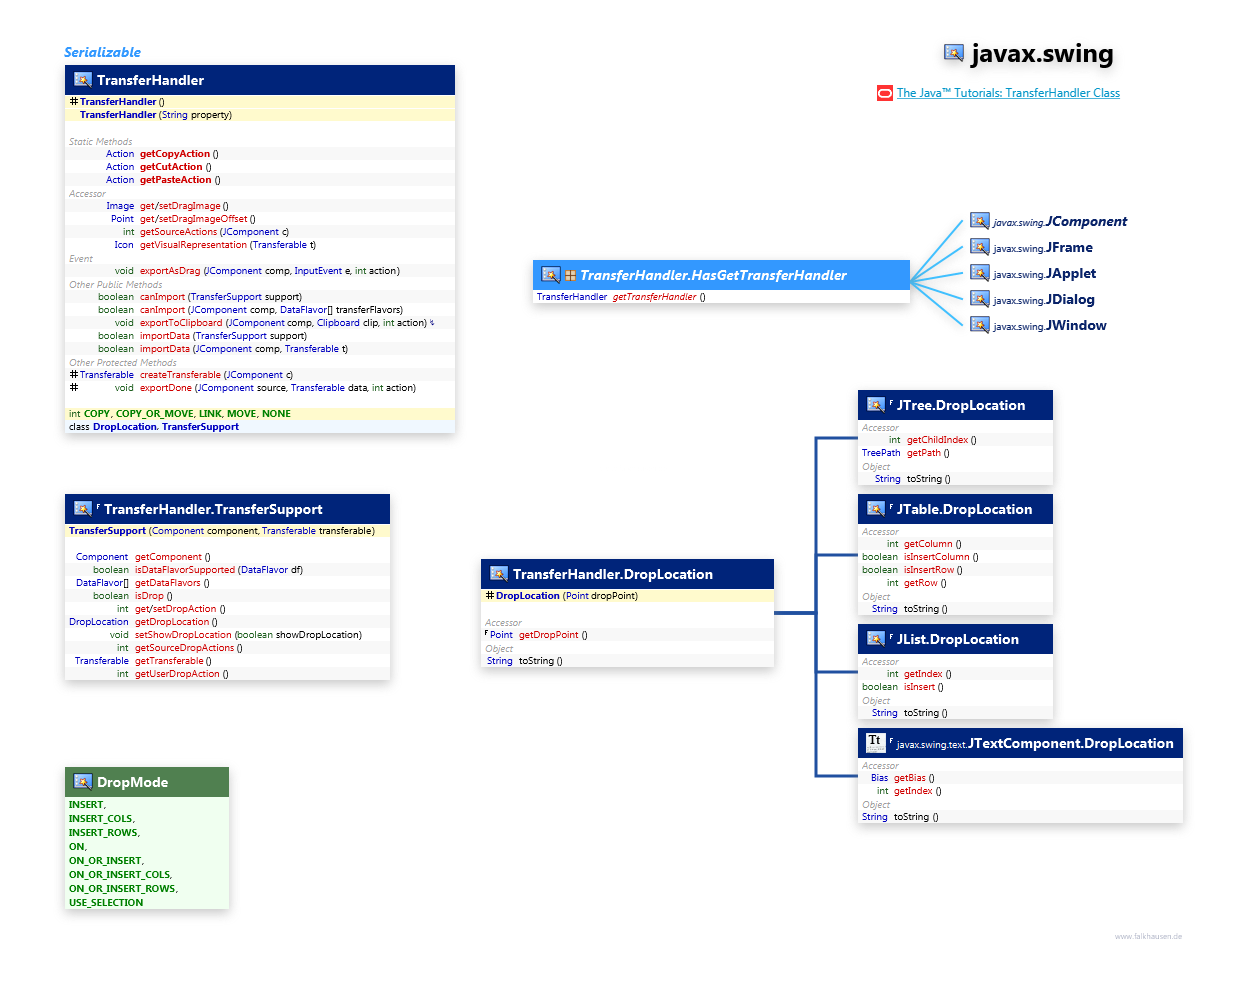 javax.swing TransferHandler class diagram and api documentation for Java 8